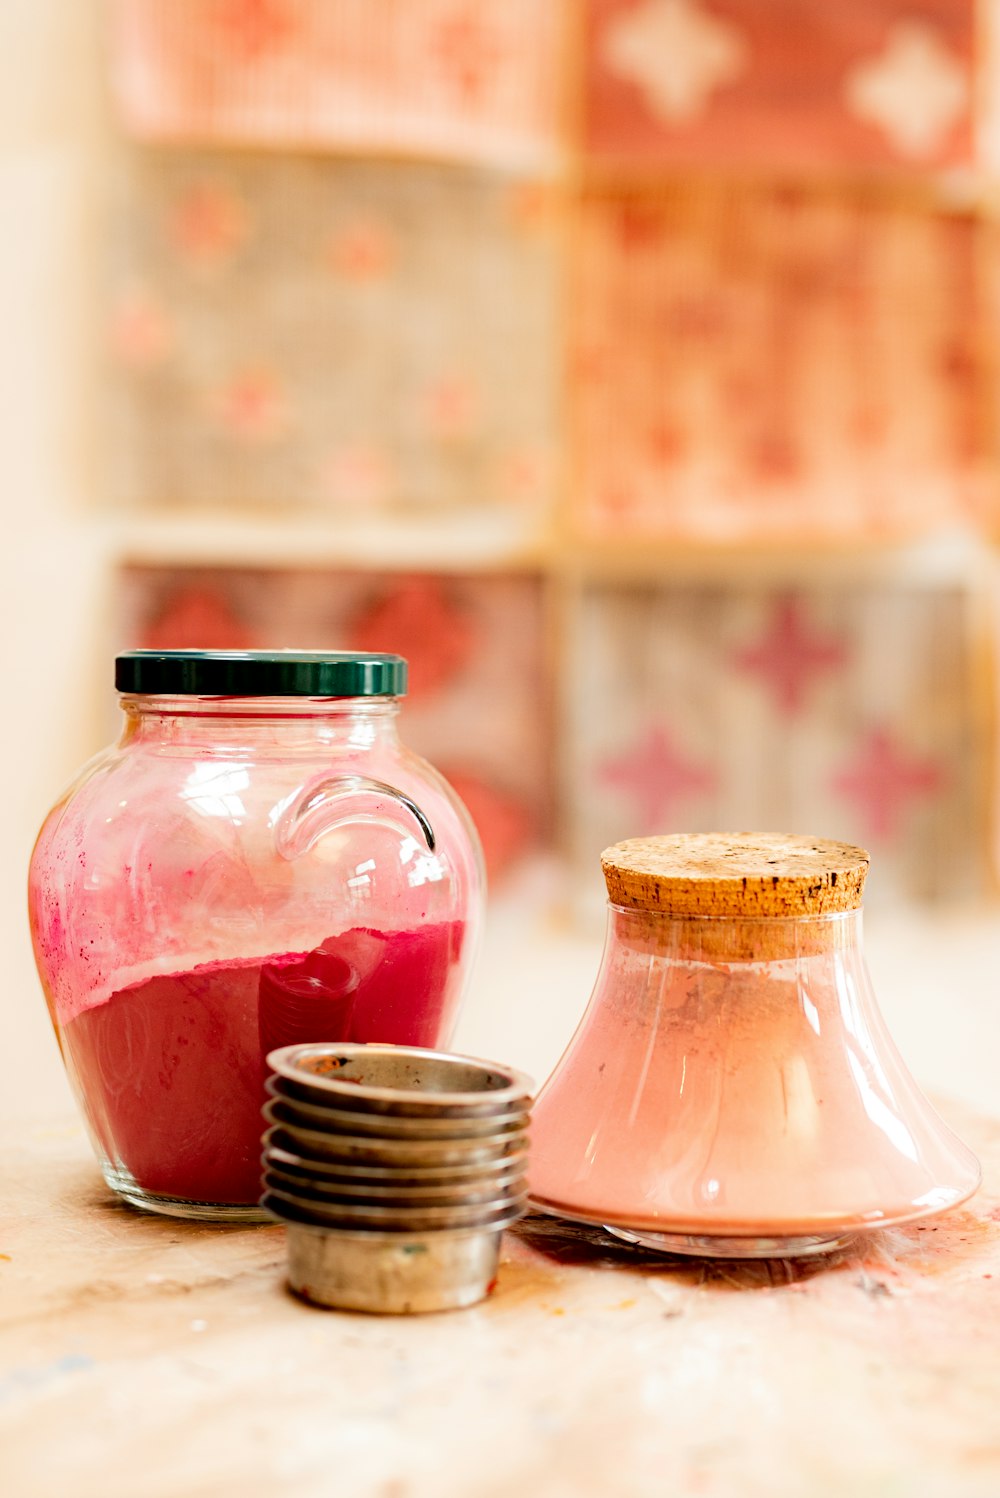 clear glass jar with brown powder inside